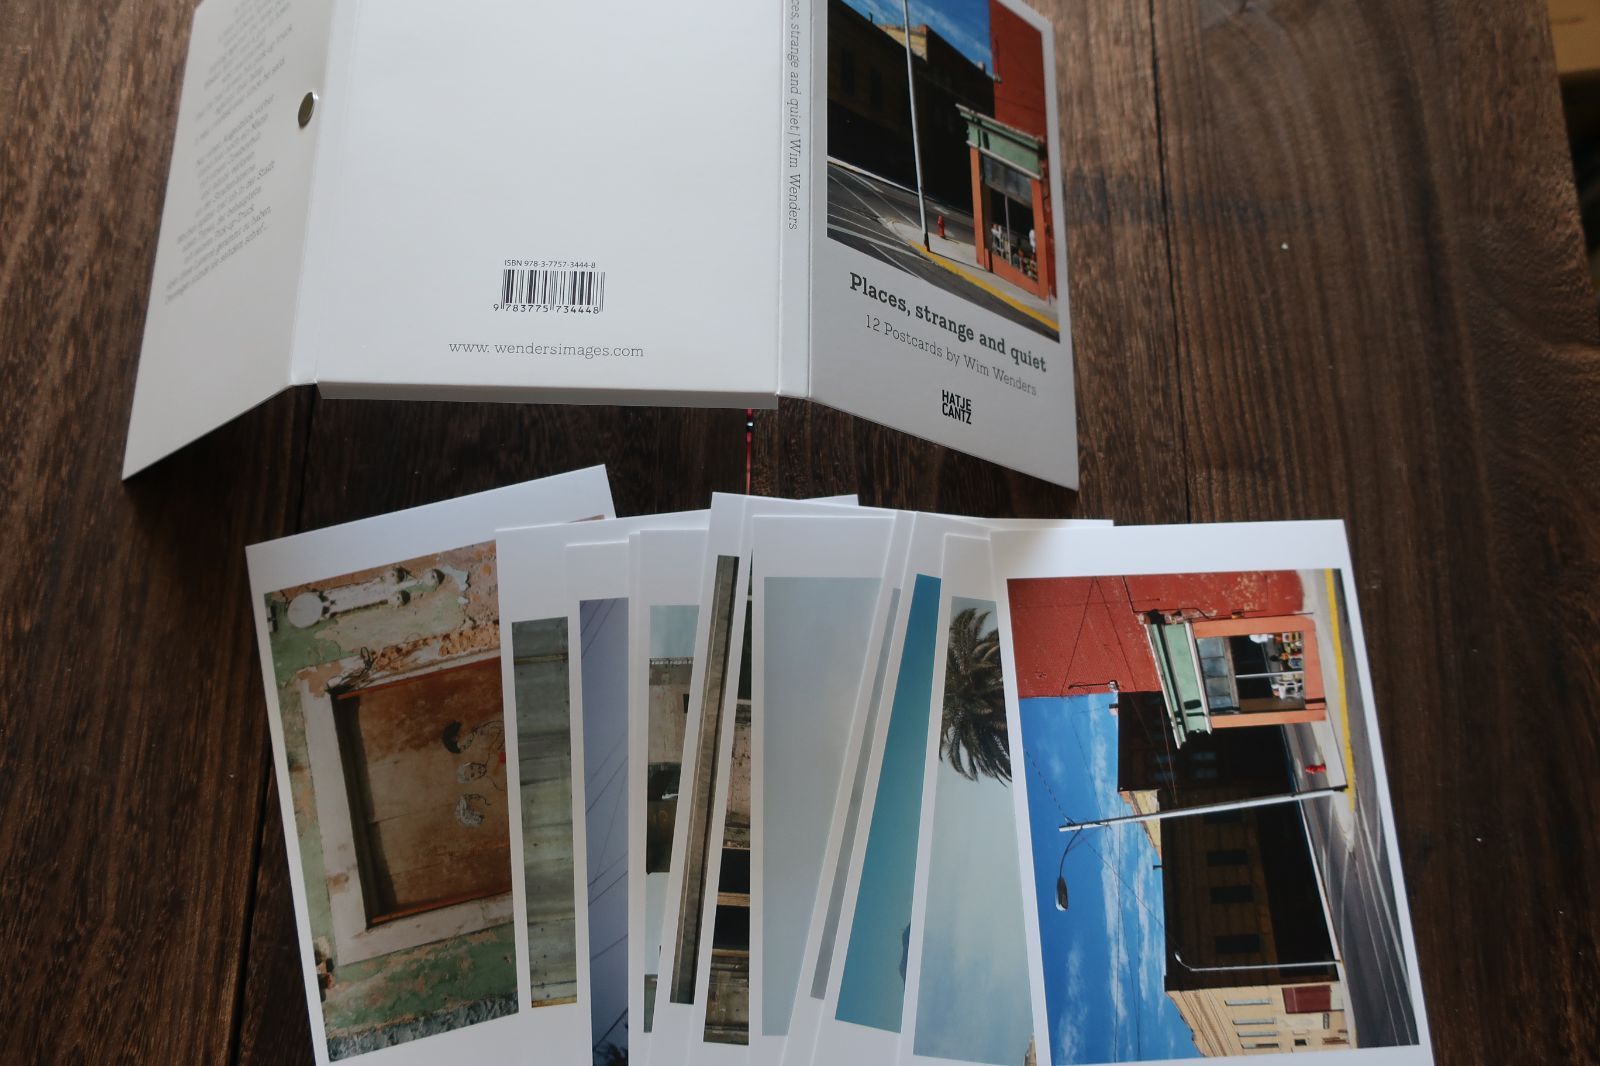 Places,strange and quiet : Wim Wenders - chako330books - メルカリ